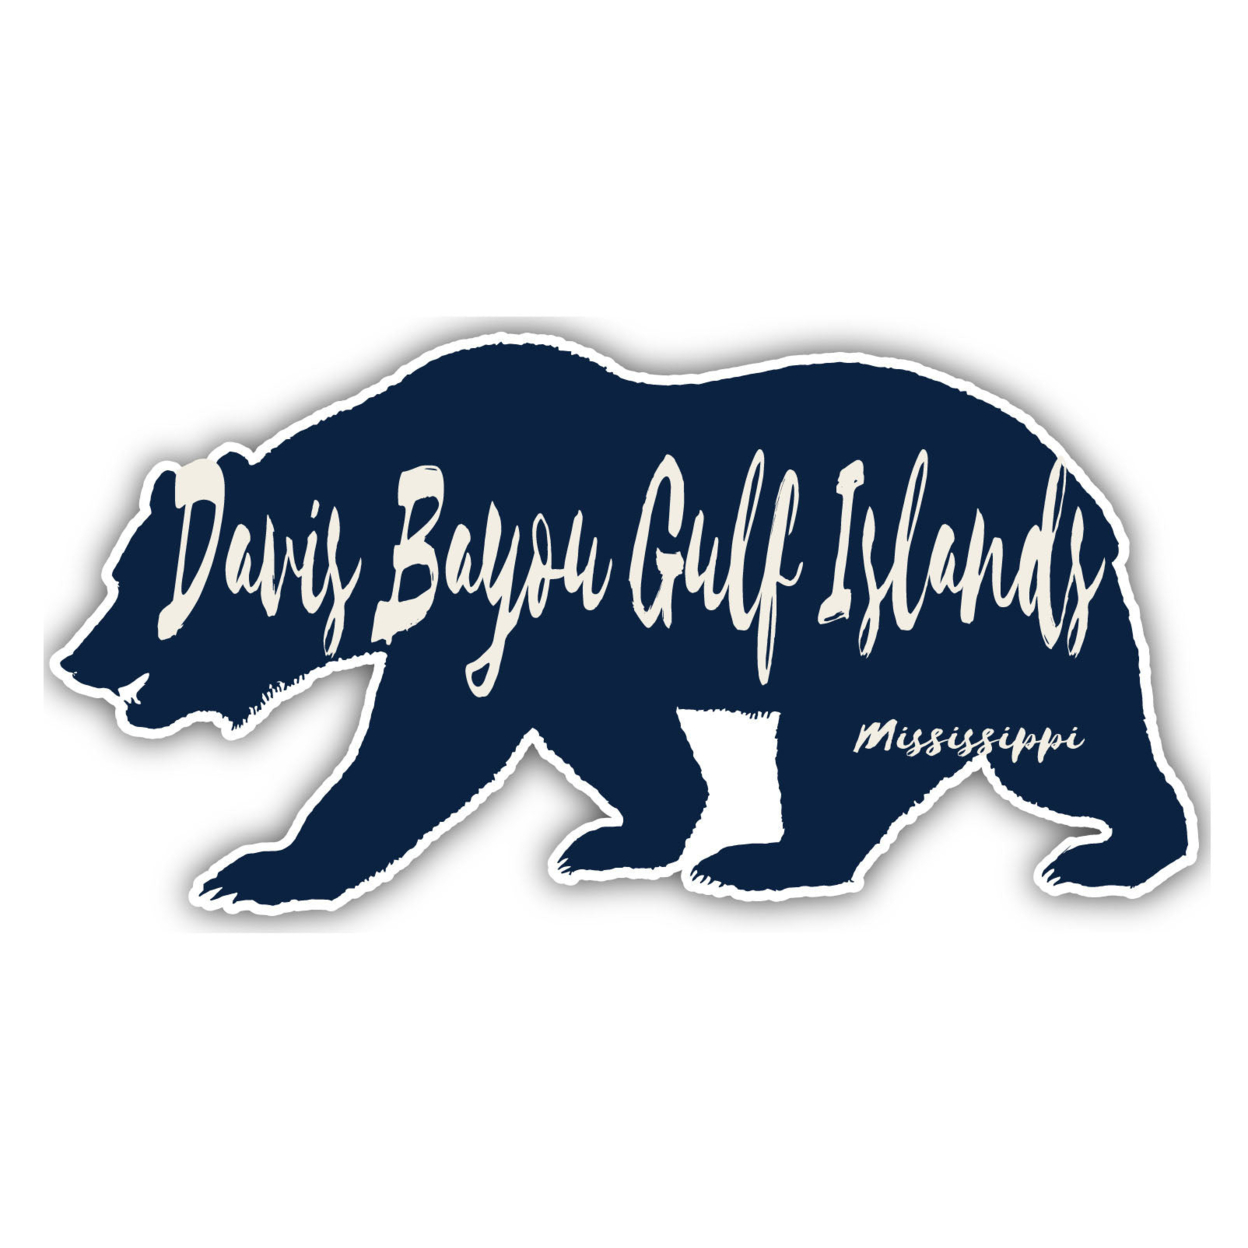 Davis Bayou Gulf Islands Mississippi Souvenir Decorative Stickers (Choose Theme And Size) - Single Unit, 6-Inch, Bear